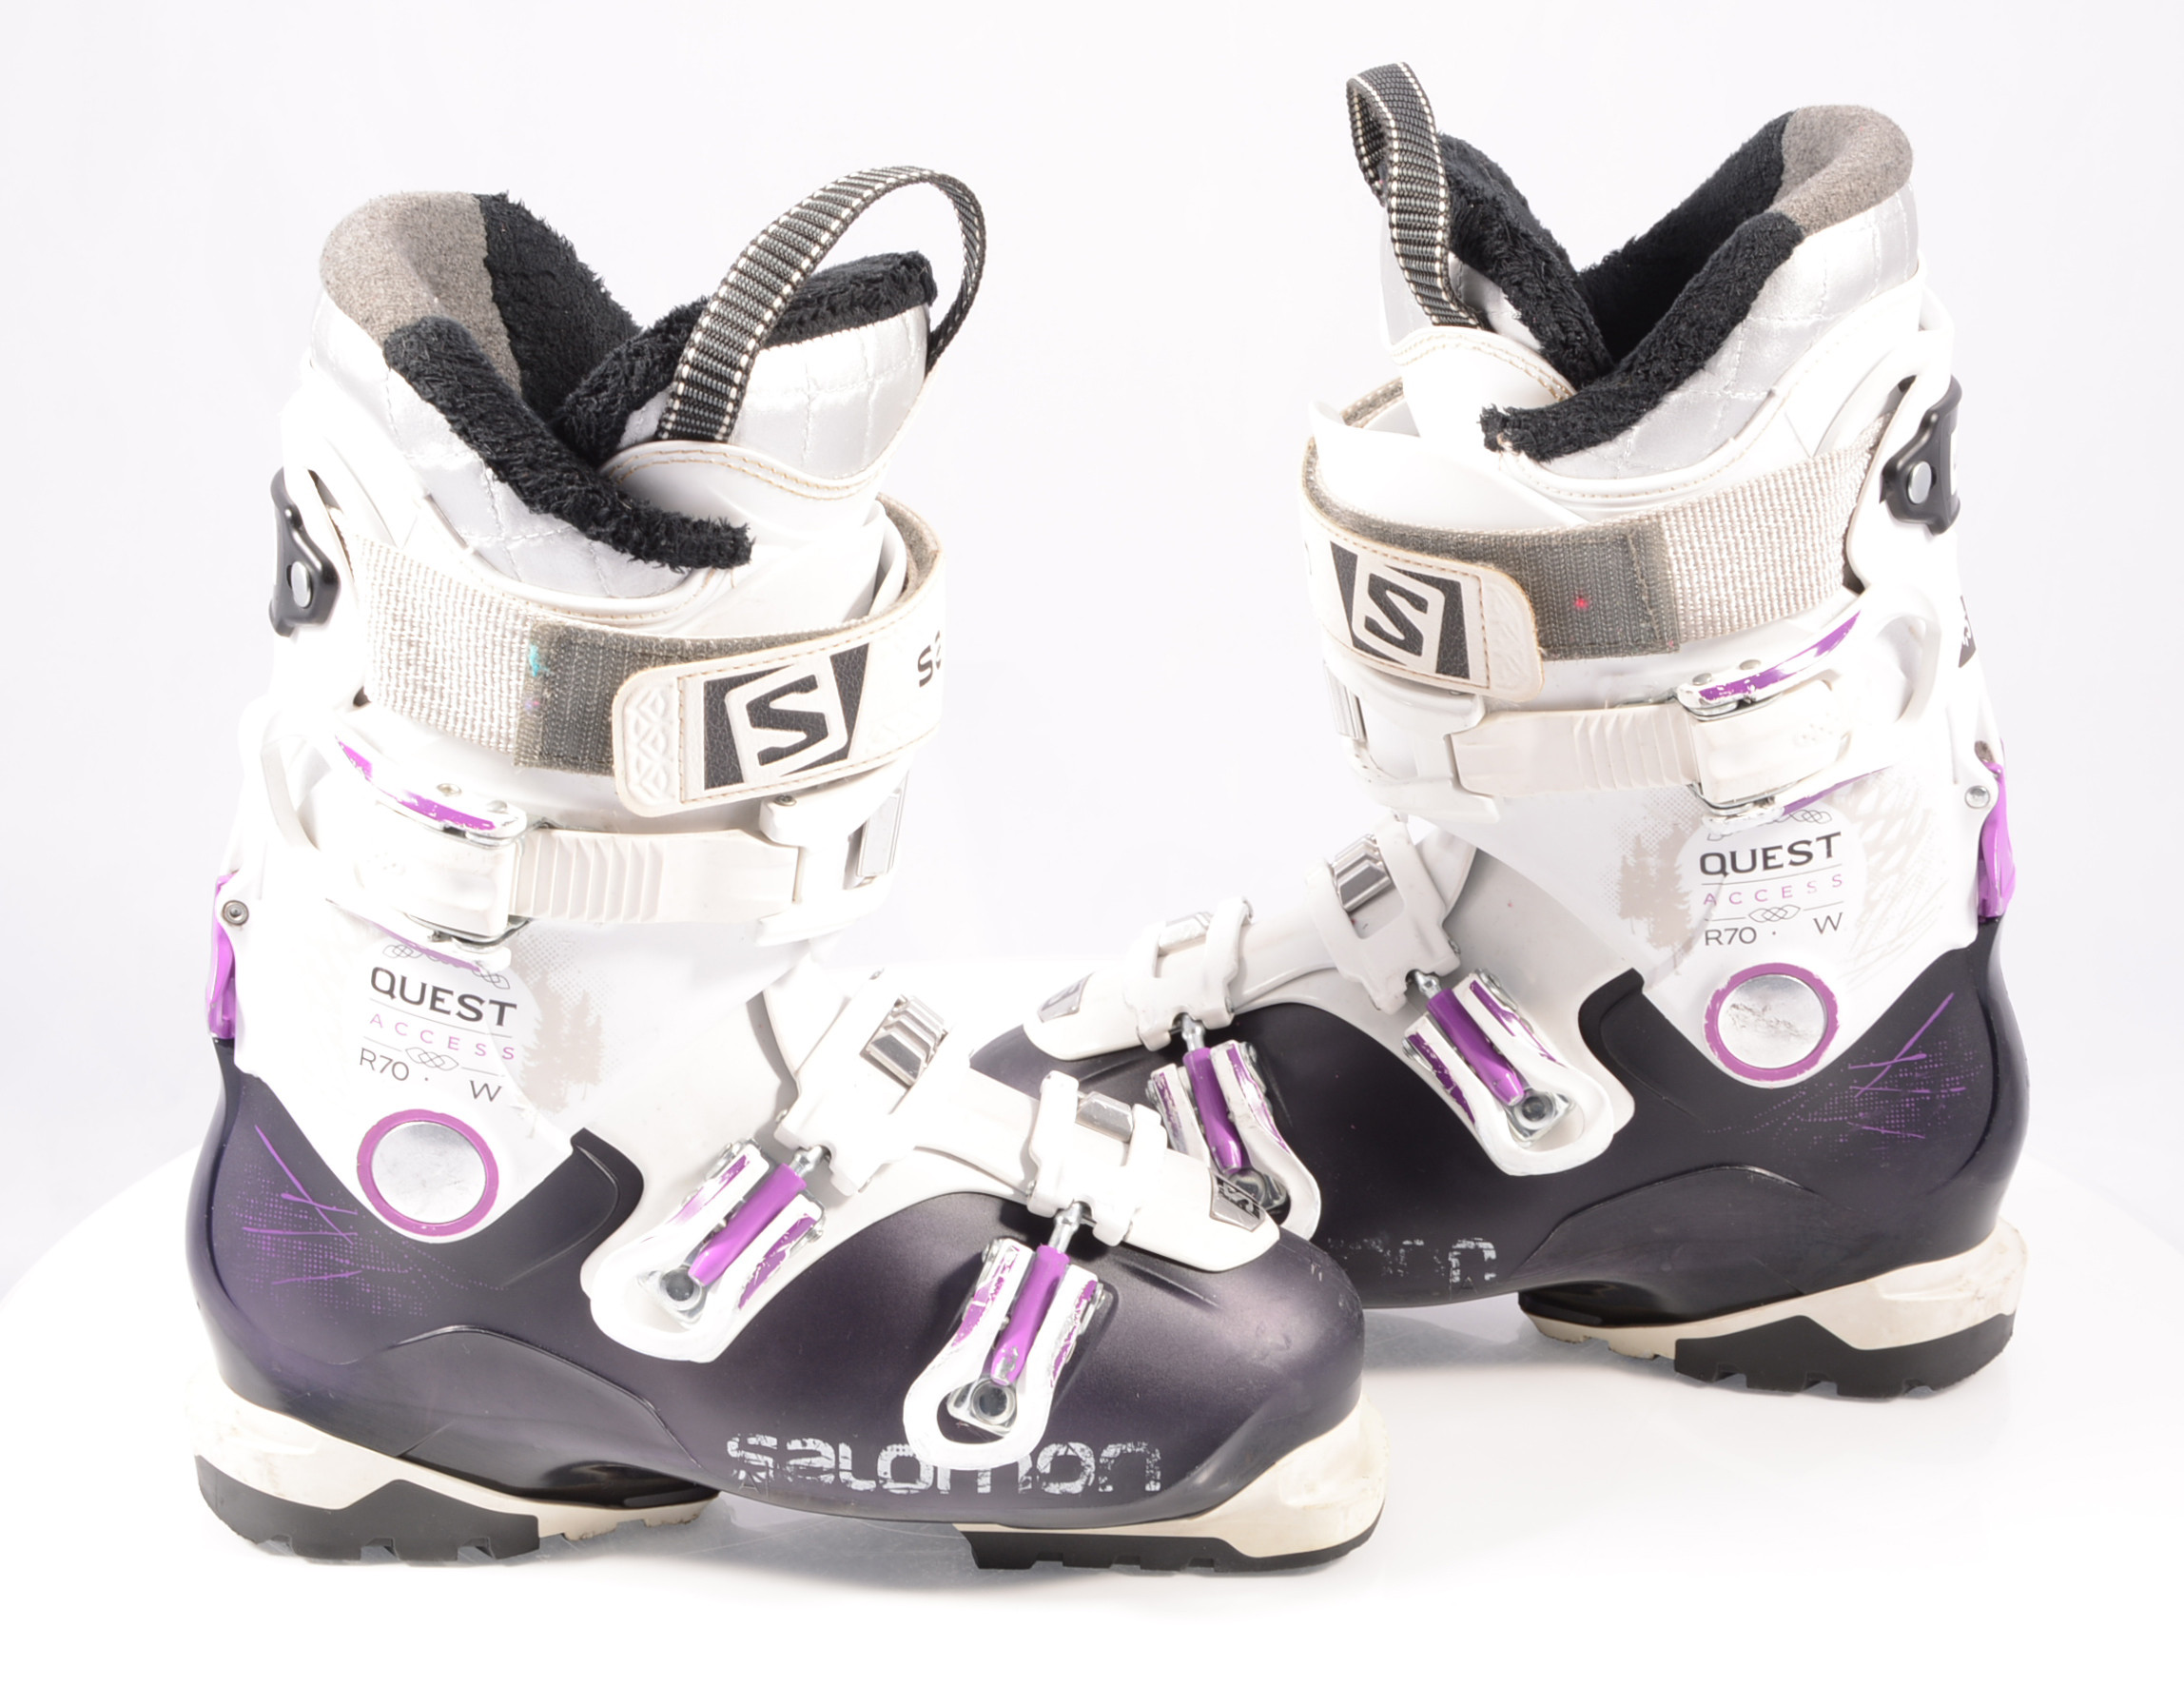 Daar Moskee Guinness Damen Skischuhe SALOMON QUEST ACCESS R70 W purple/white, SKI/WALK, Ratchet  buckle, micro, macro - Mardosport.de